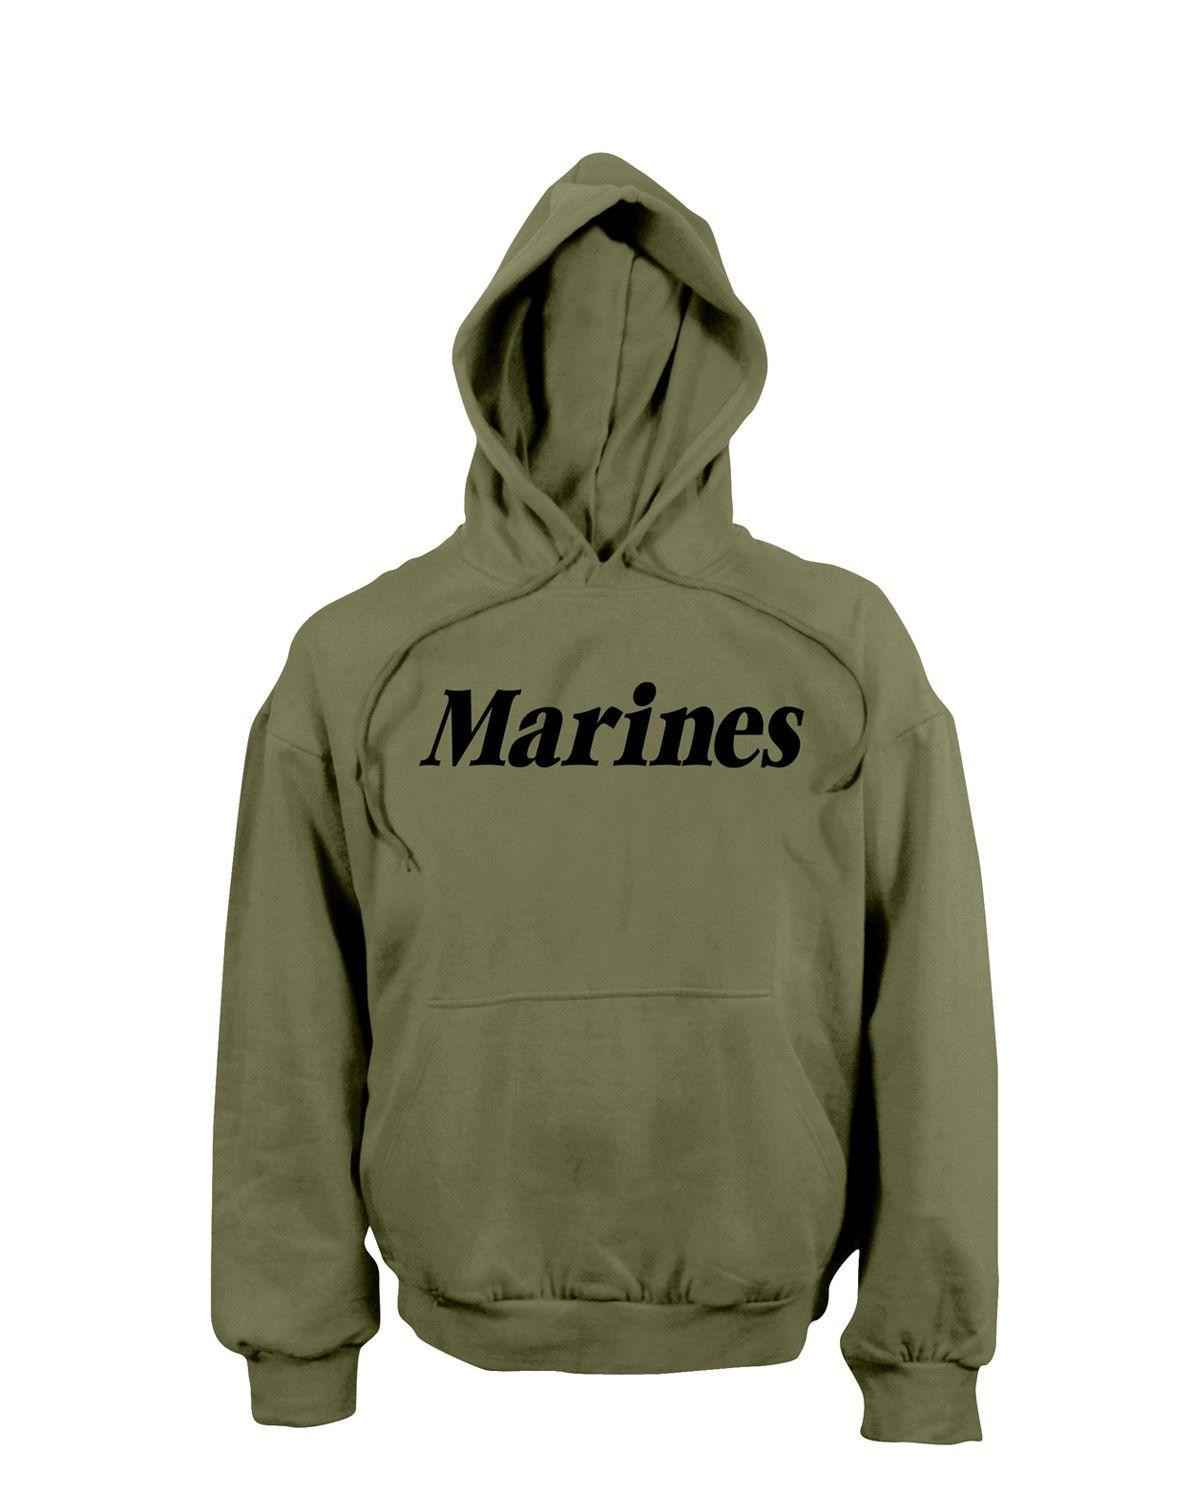 Rothco Trænings Sweatshirt (Oliven m. Marines, S)